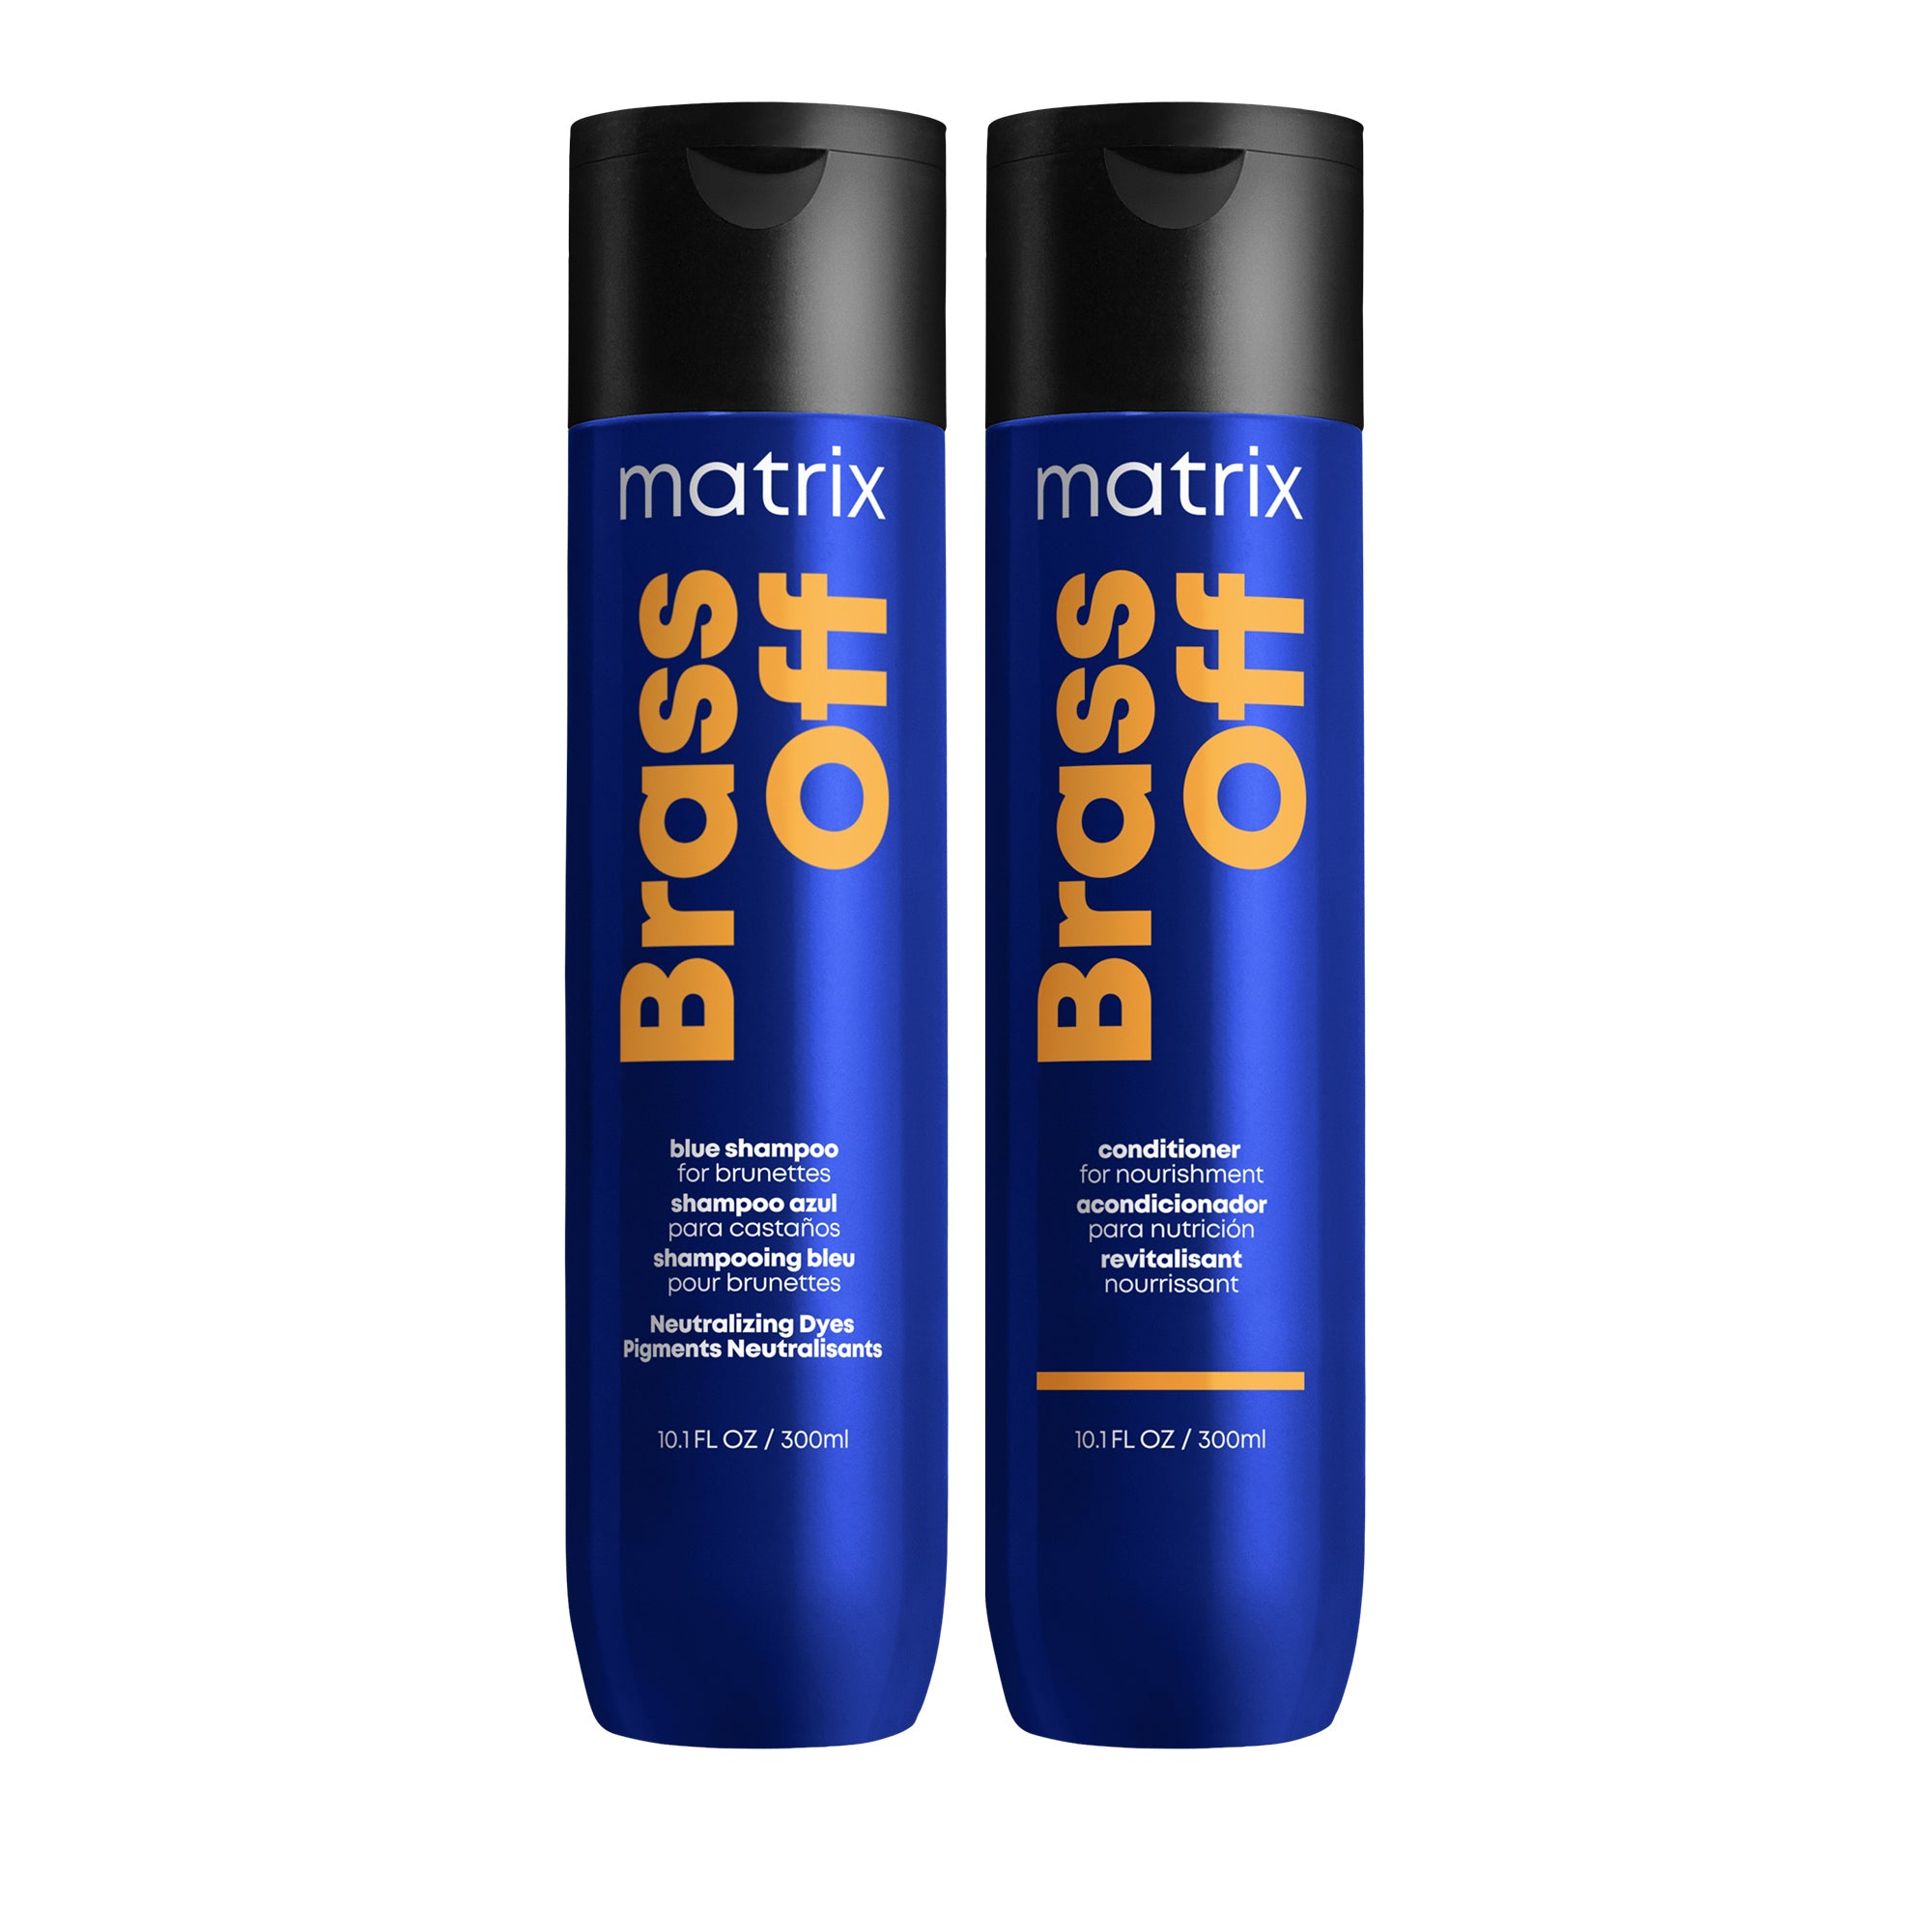 Matrix Brass Off Shampoo and Conditioner Duo 10oz ($40 Value) / 10OZ